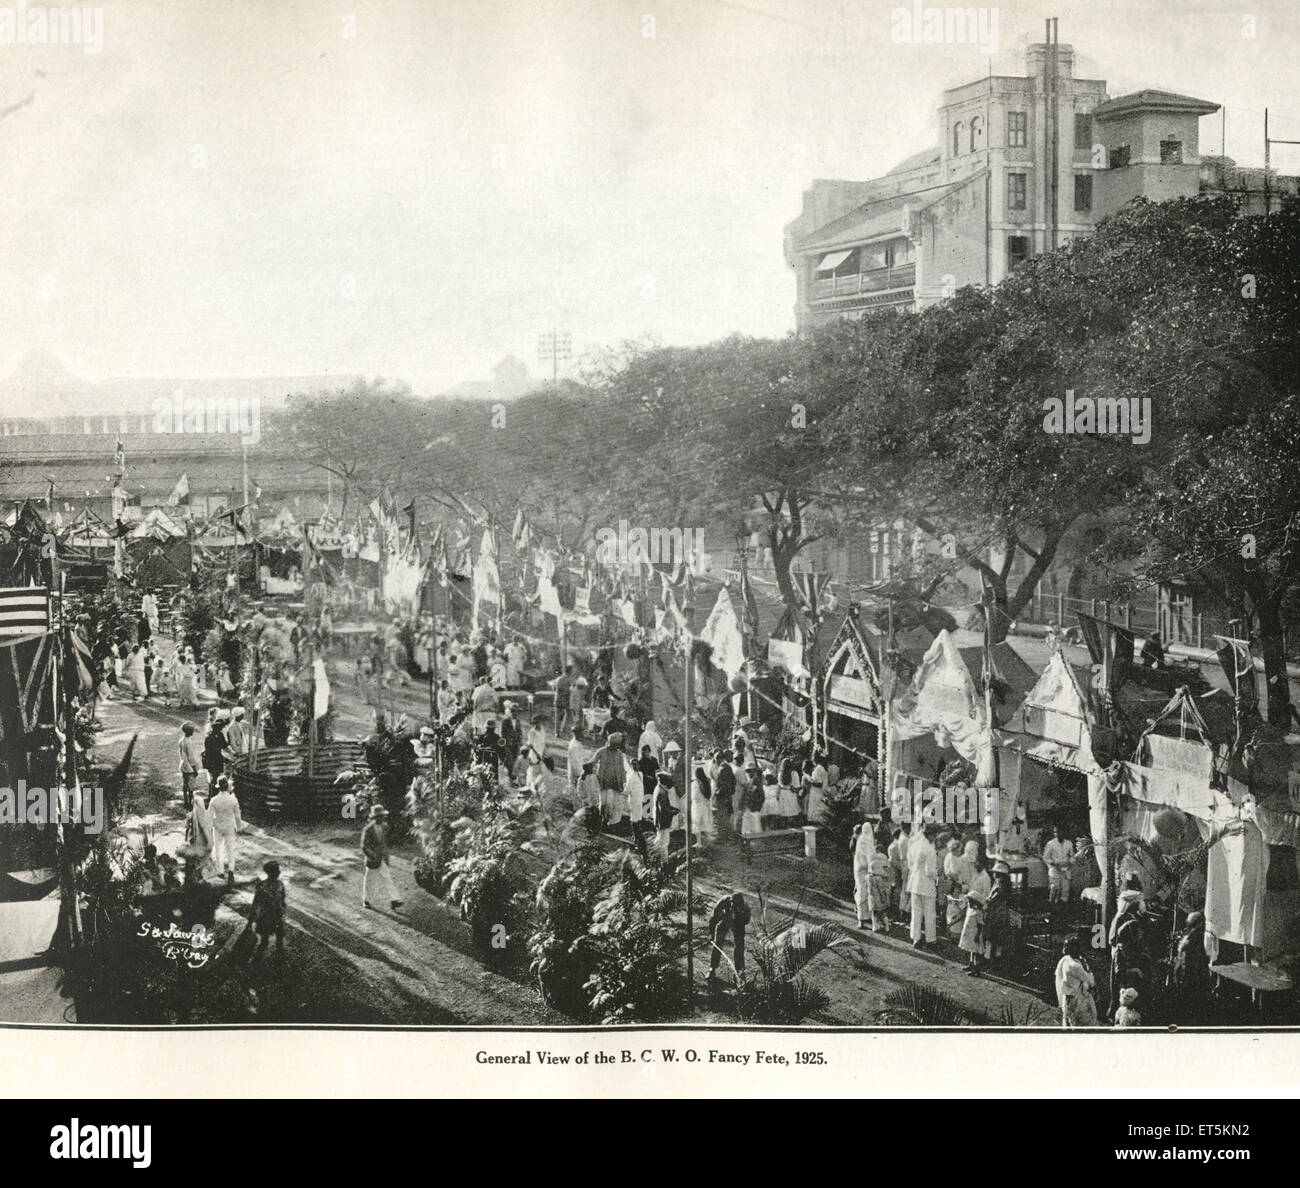 Katholische Gemeinschaft; BCWO Fancy Fete; Bombay; Mumbai; Maharashtra; Indien; Asien ; Asiatisch ; Indisch ; alter Jahrgang 1925 Bild Stockfoto